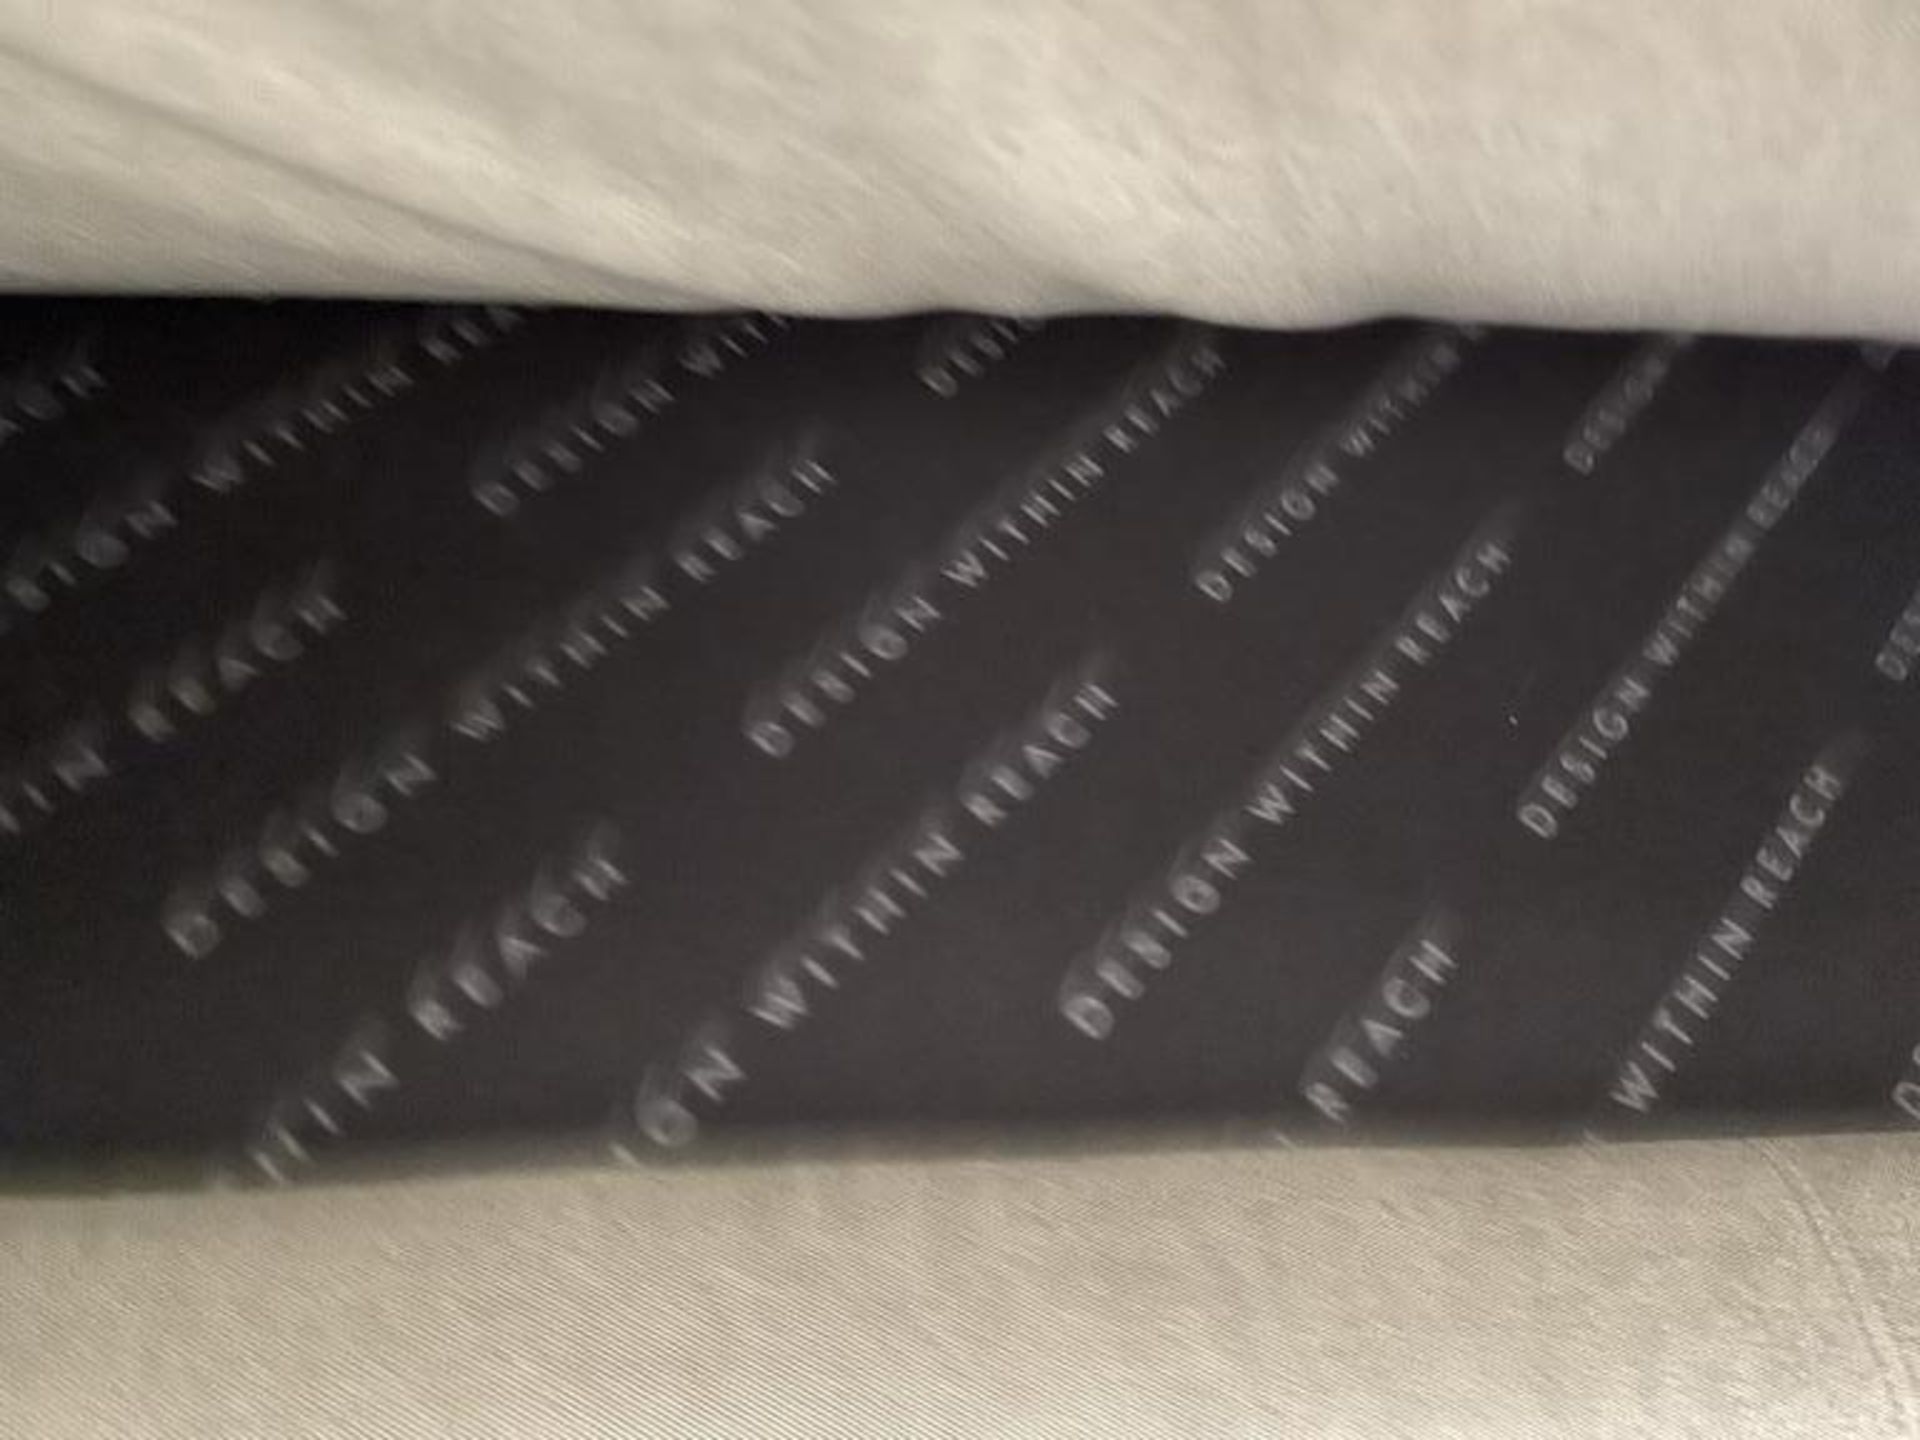 DWR Bantam Sofa Grey Fabric 73"x33" - Image 4 of 4